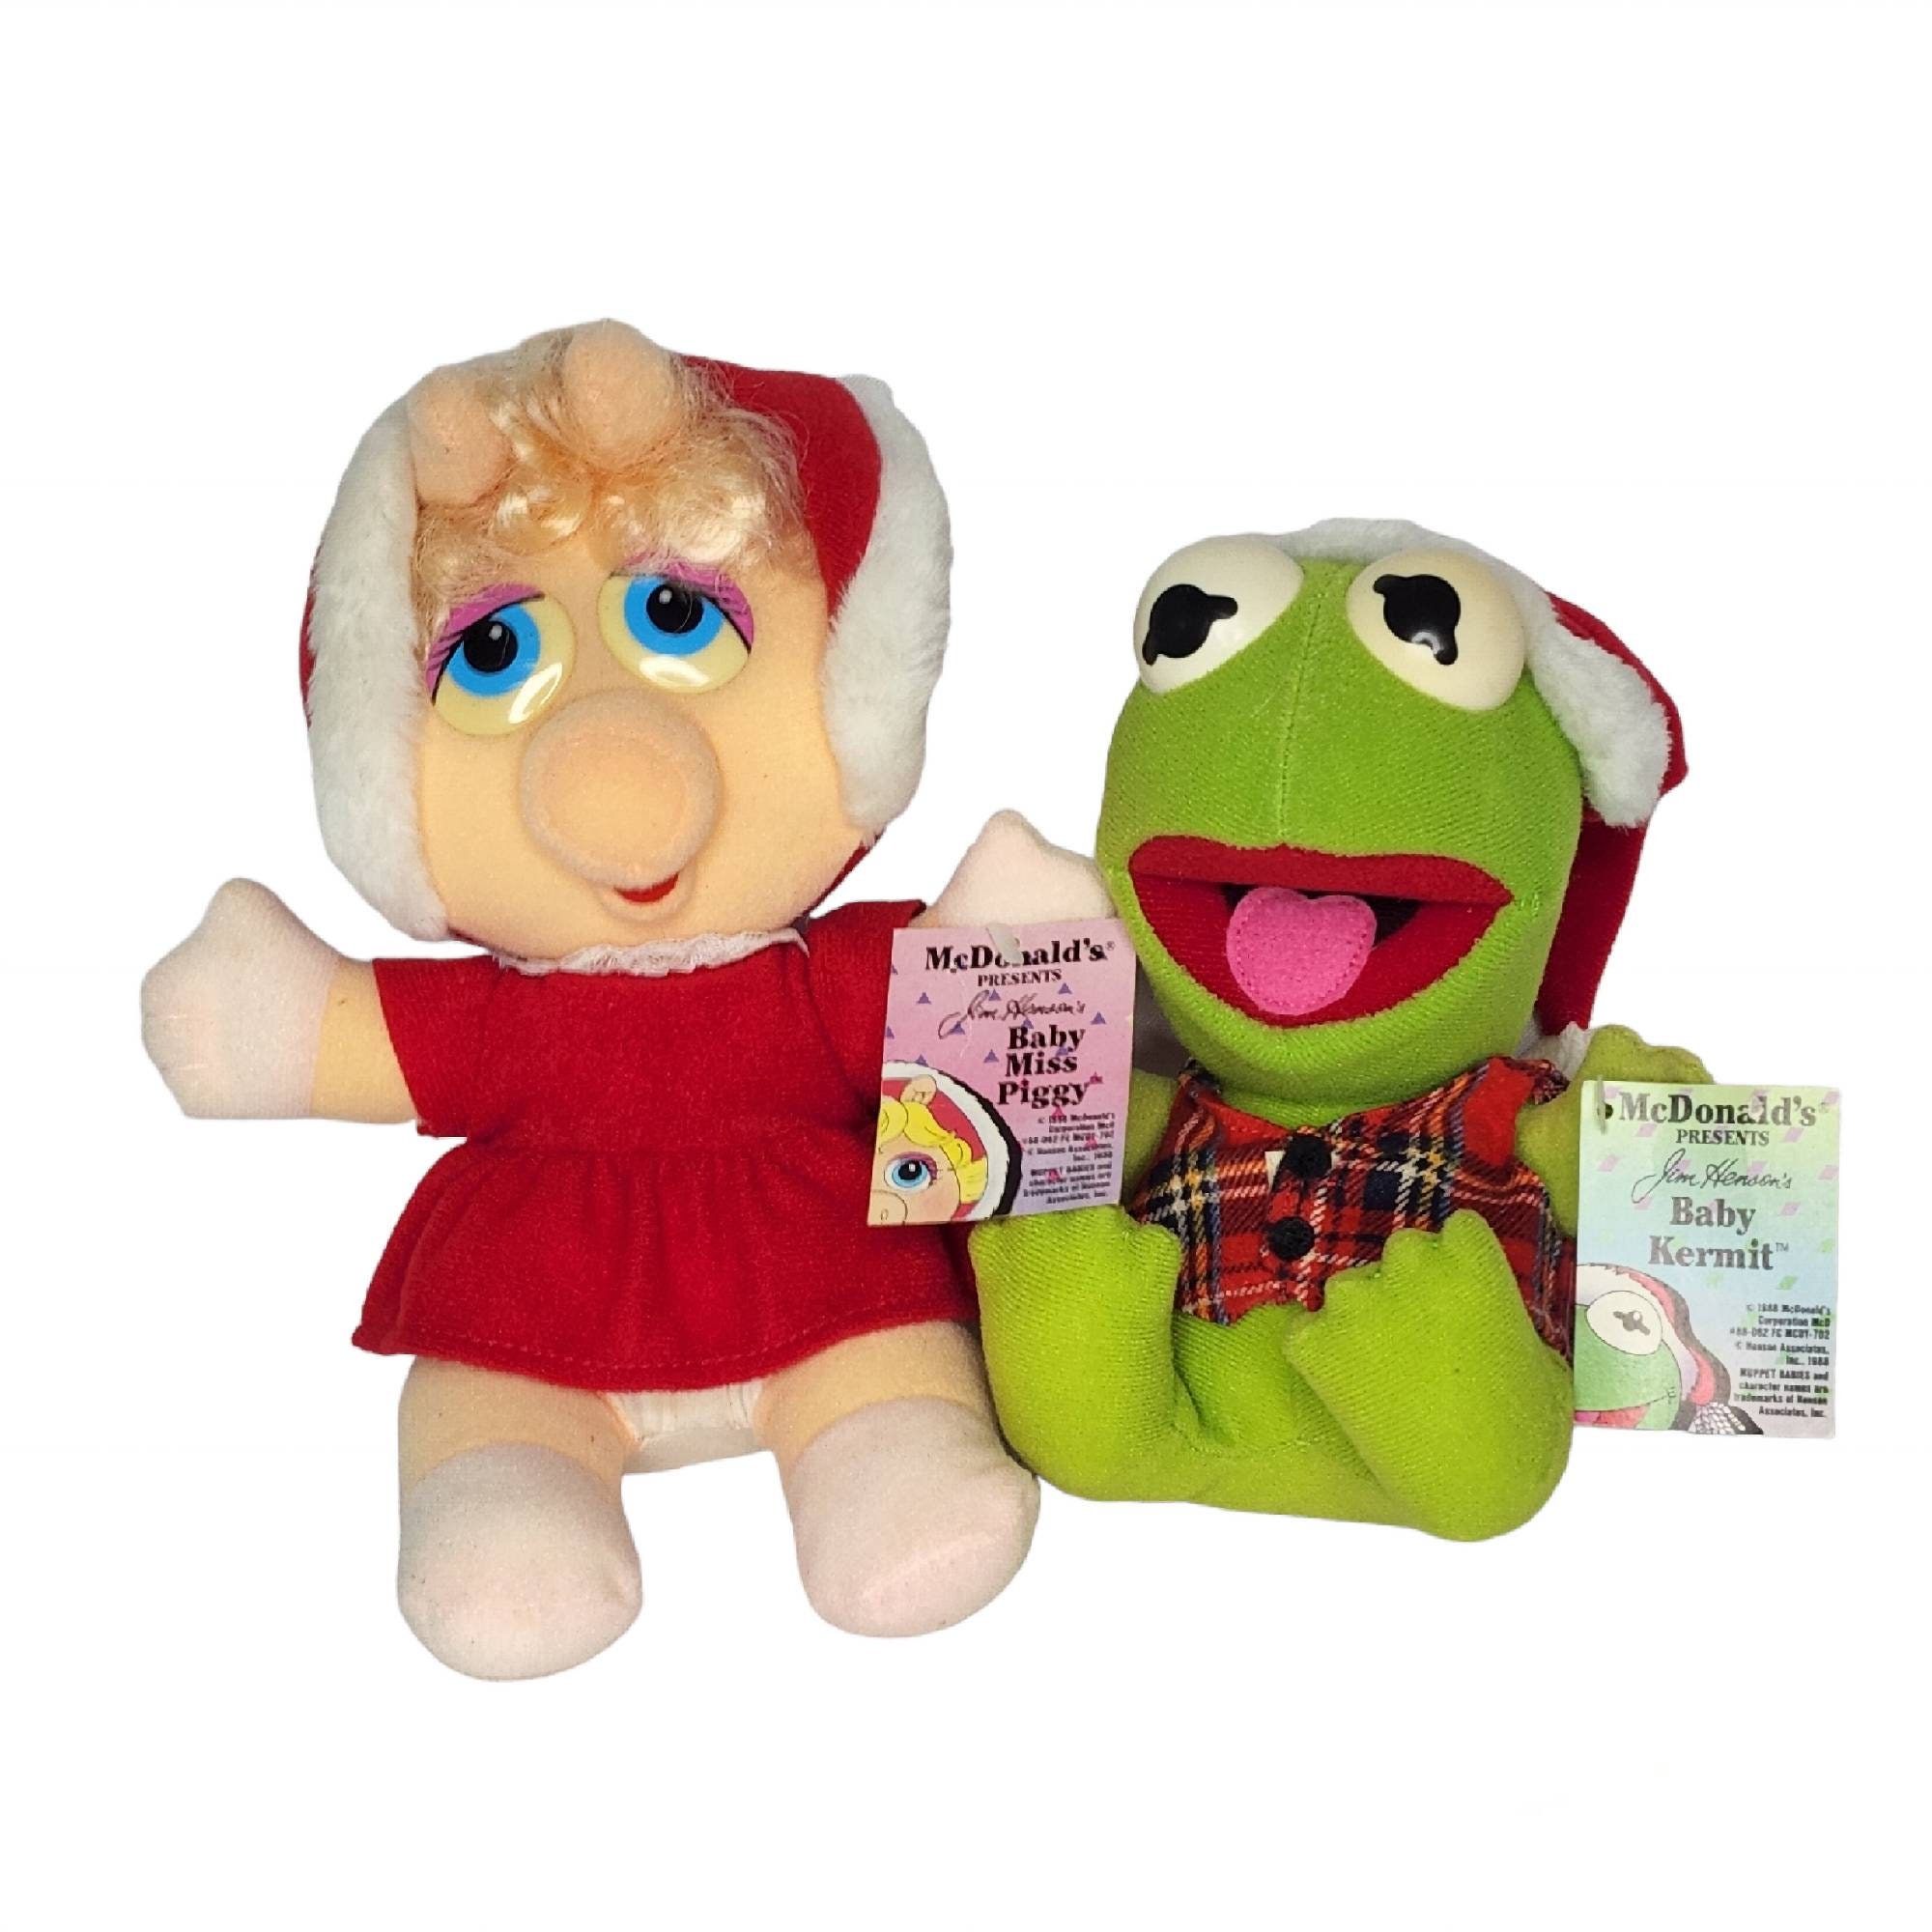 Vintage McDonalds Muppets Kermit the Frog 1987 Plush Toy